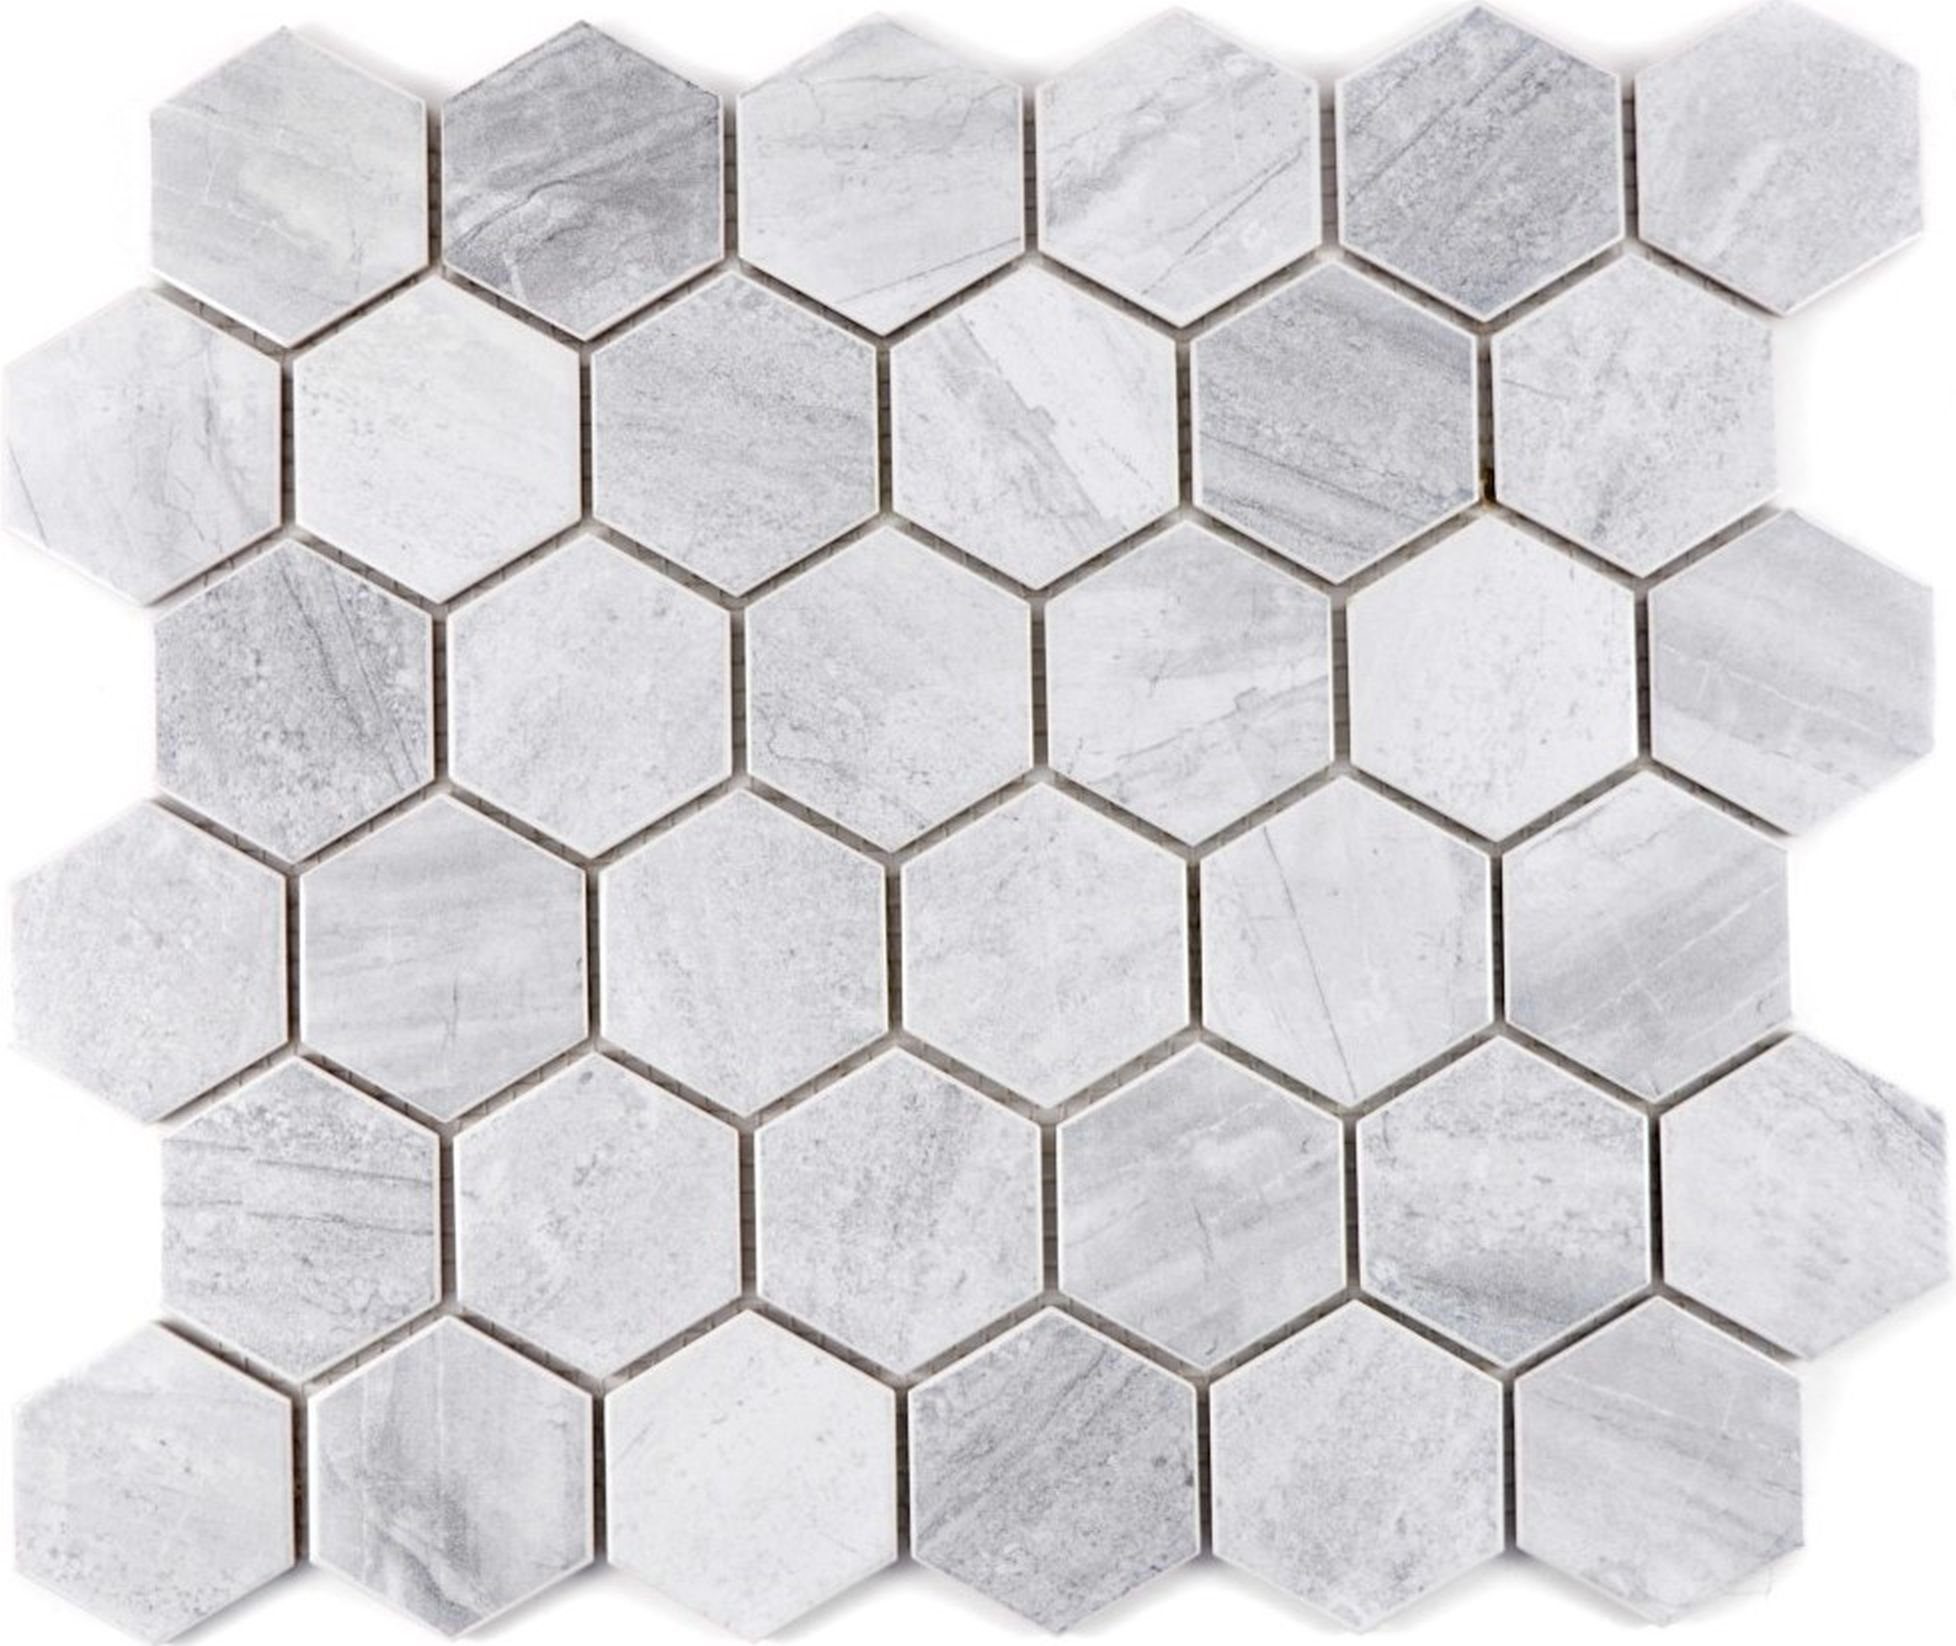 Mosani Mosaikfliesen Keramikmosaik matt 10 Hexagon Mosaikfliesen grau / Matten